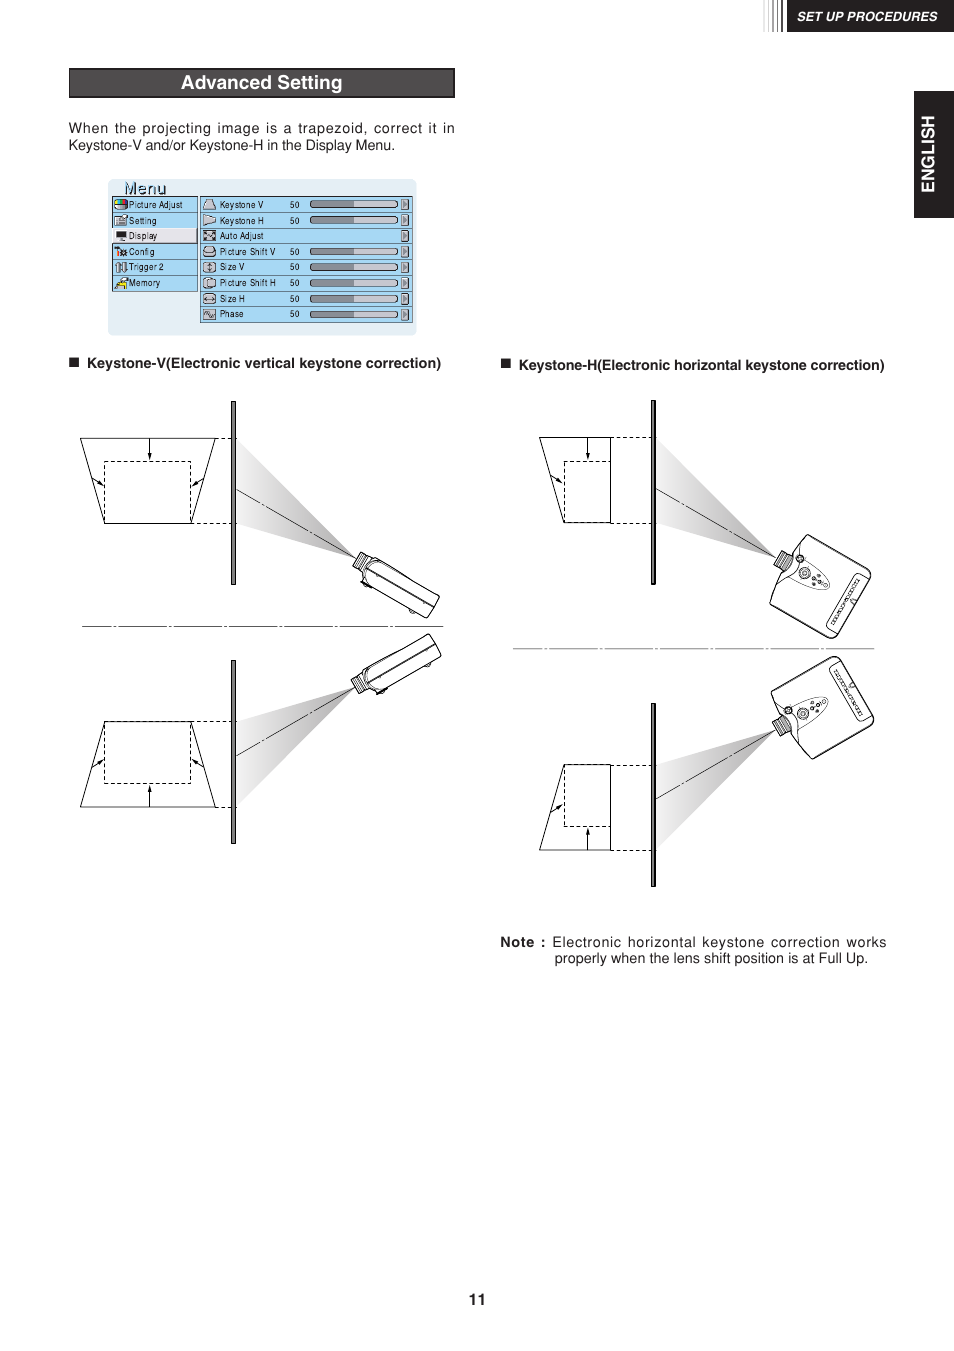 Advanced setting, English | Marantz VP-12S1s User Manual | Page 15 / 30